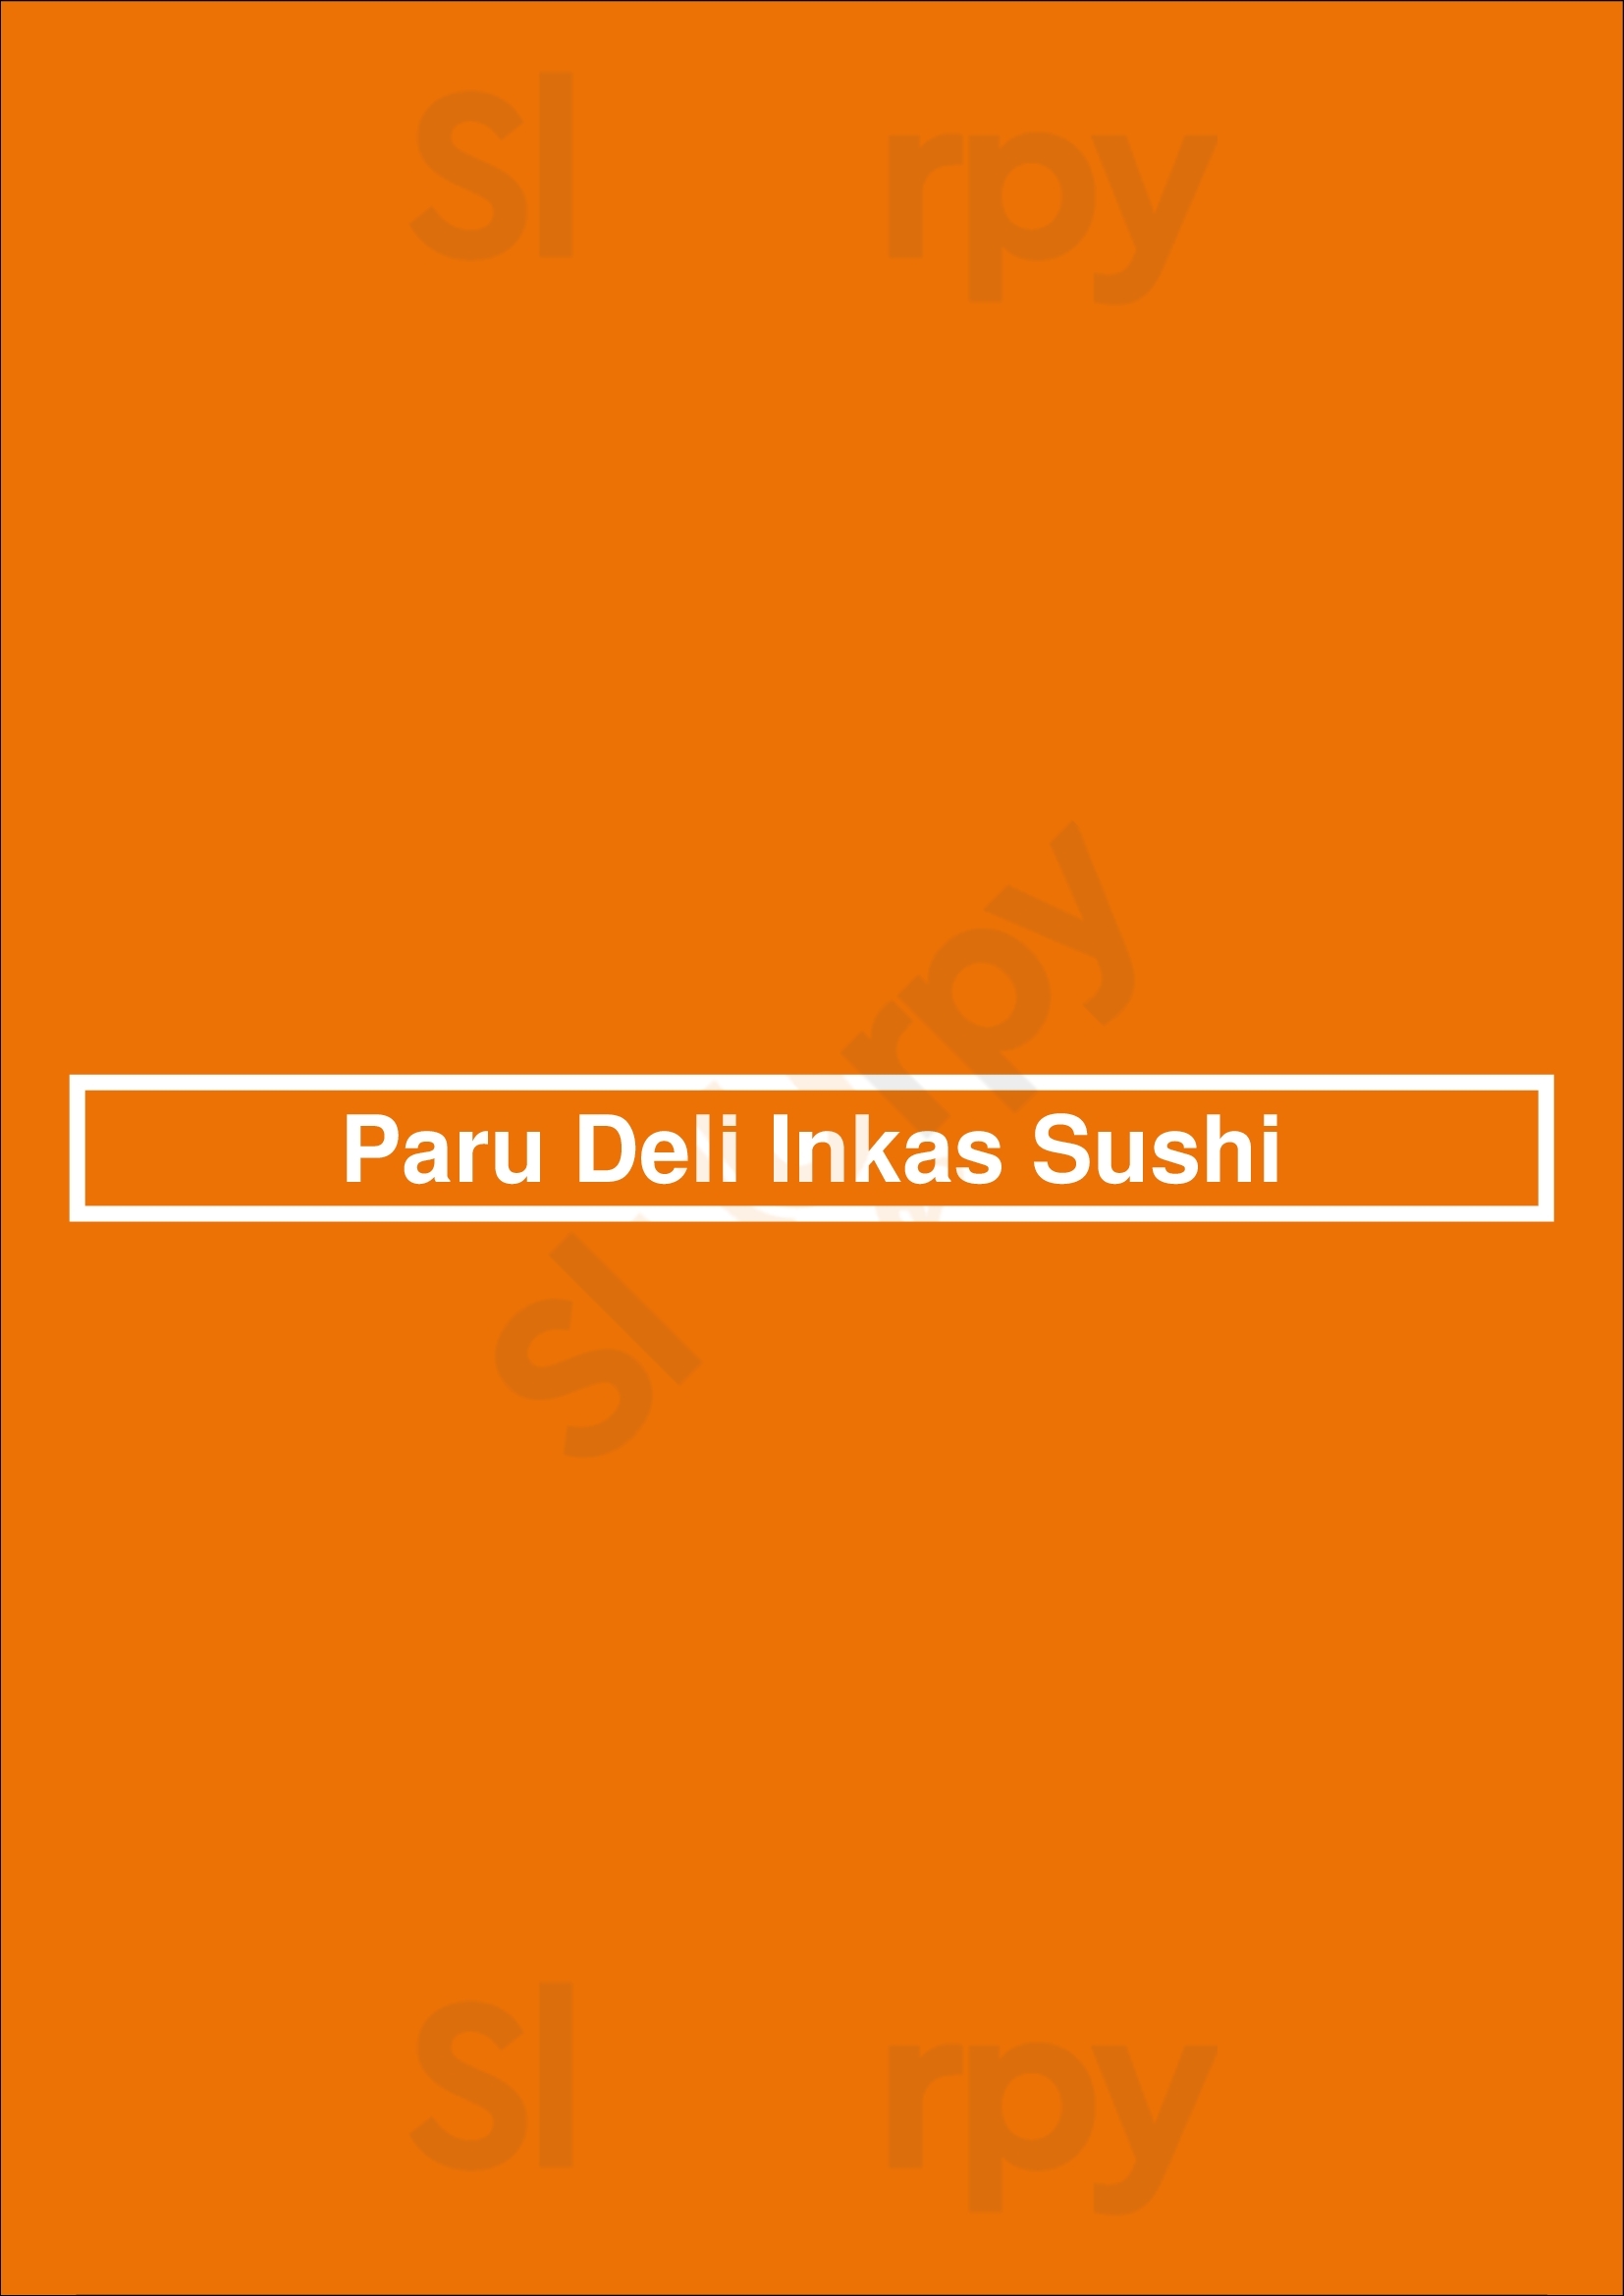 Paru Deli Inkas Sushi Olivos Menu - 1